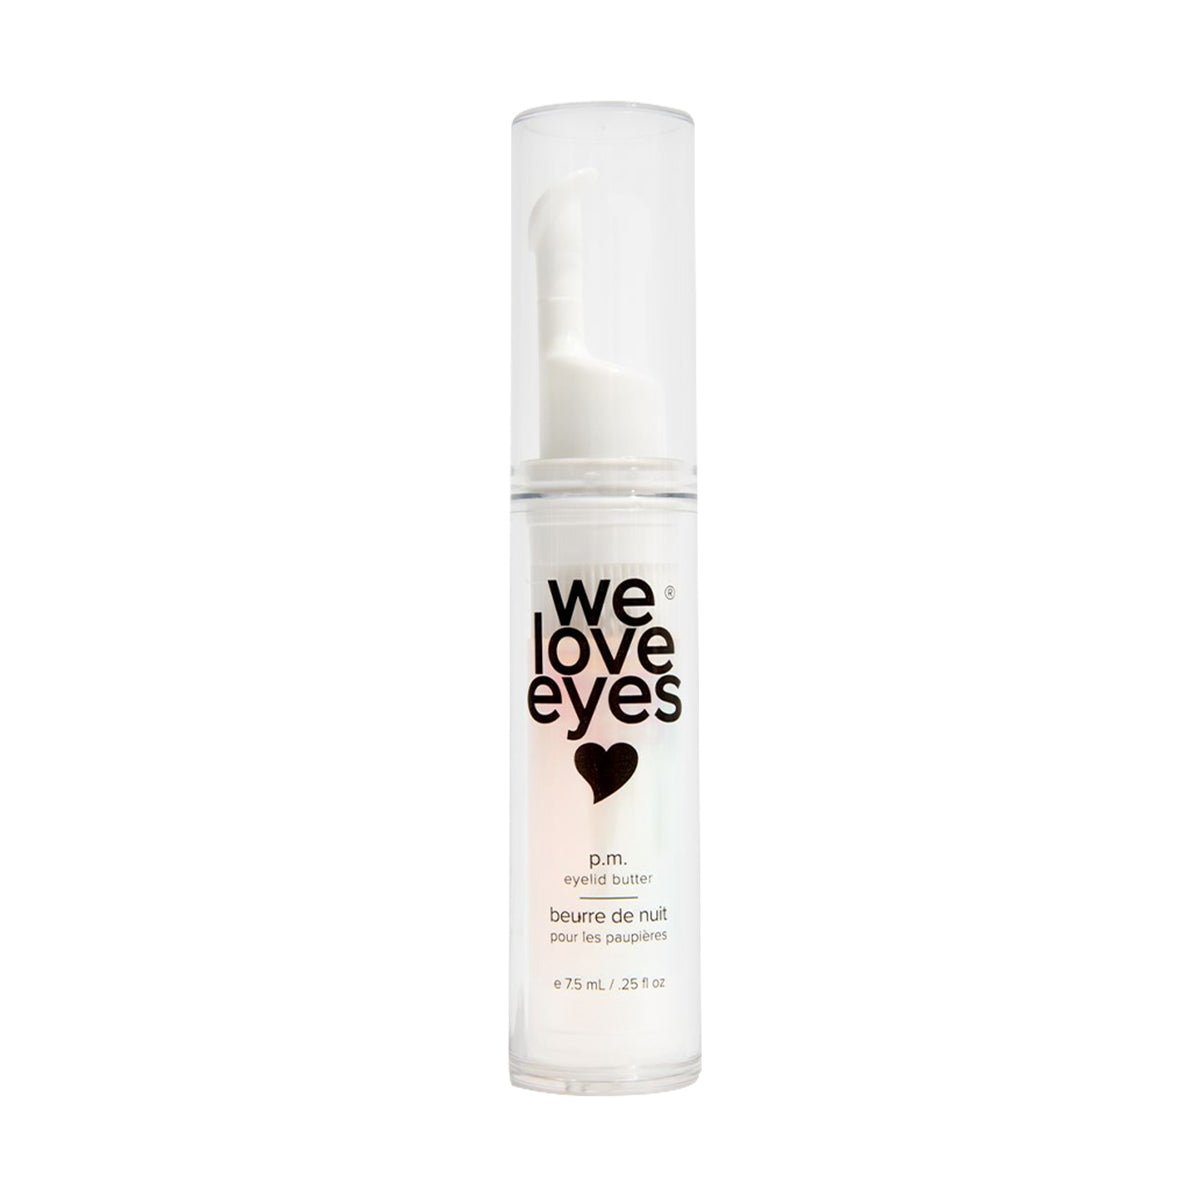 We Love Eyes - P.M. Eyelid Butter - 7.5ml - Dryeye Rescue